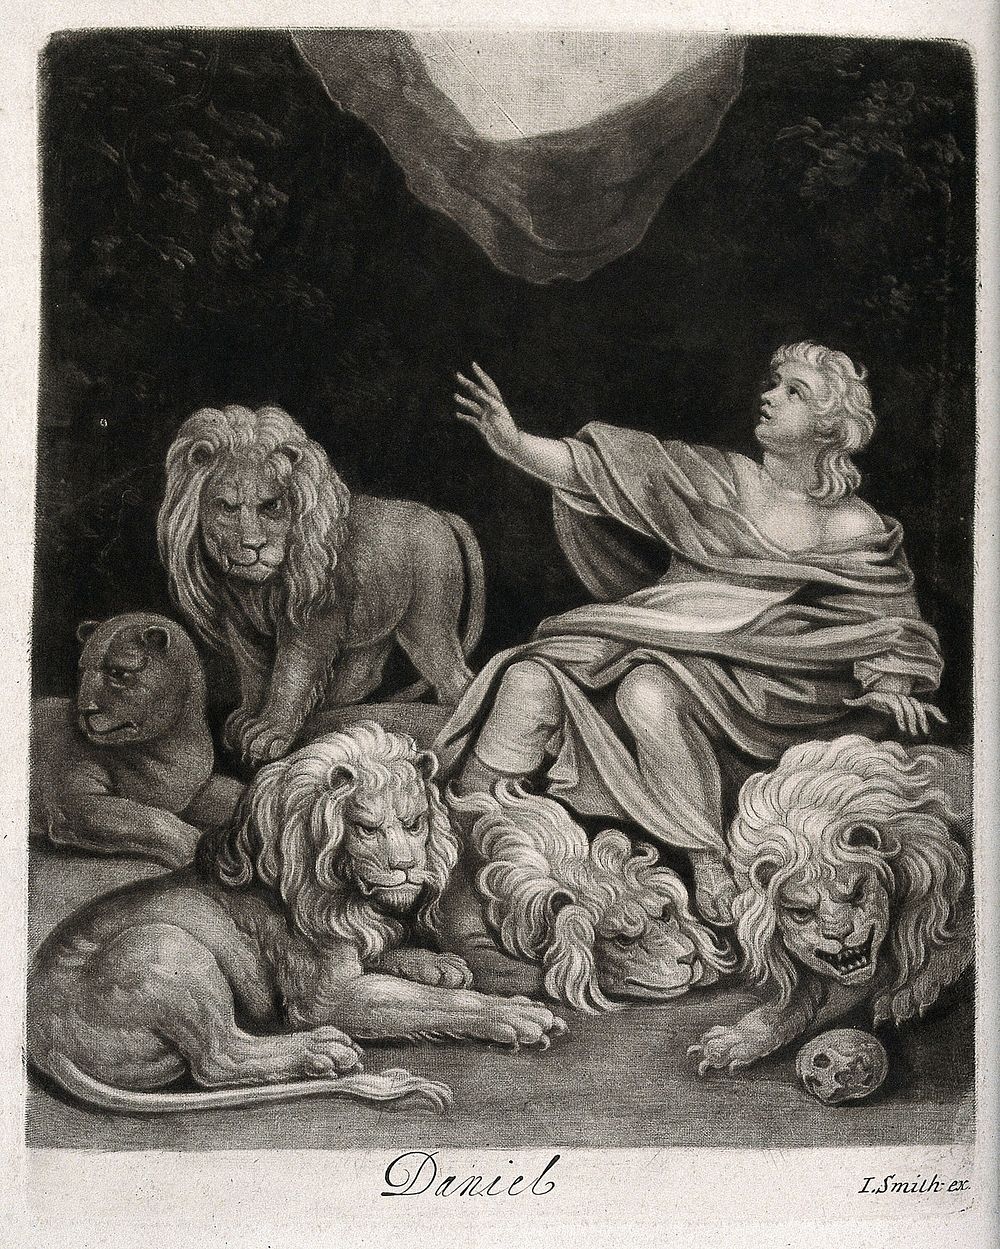 Daniel trapped with lions. Mezzotint by J. Smith.